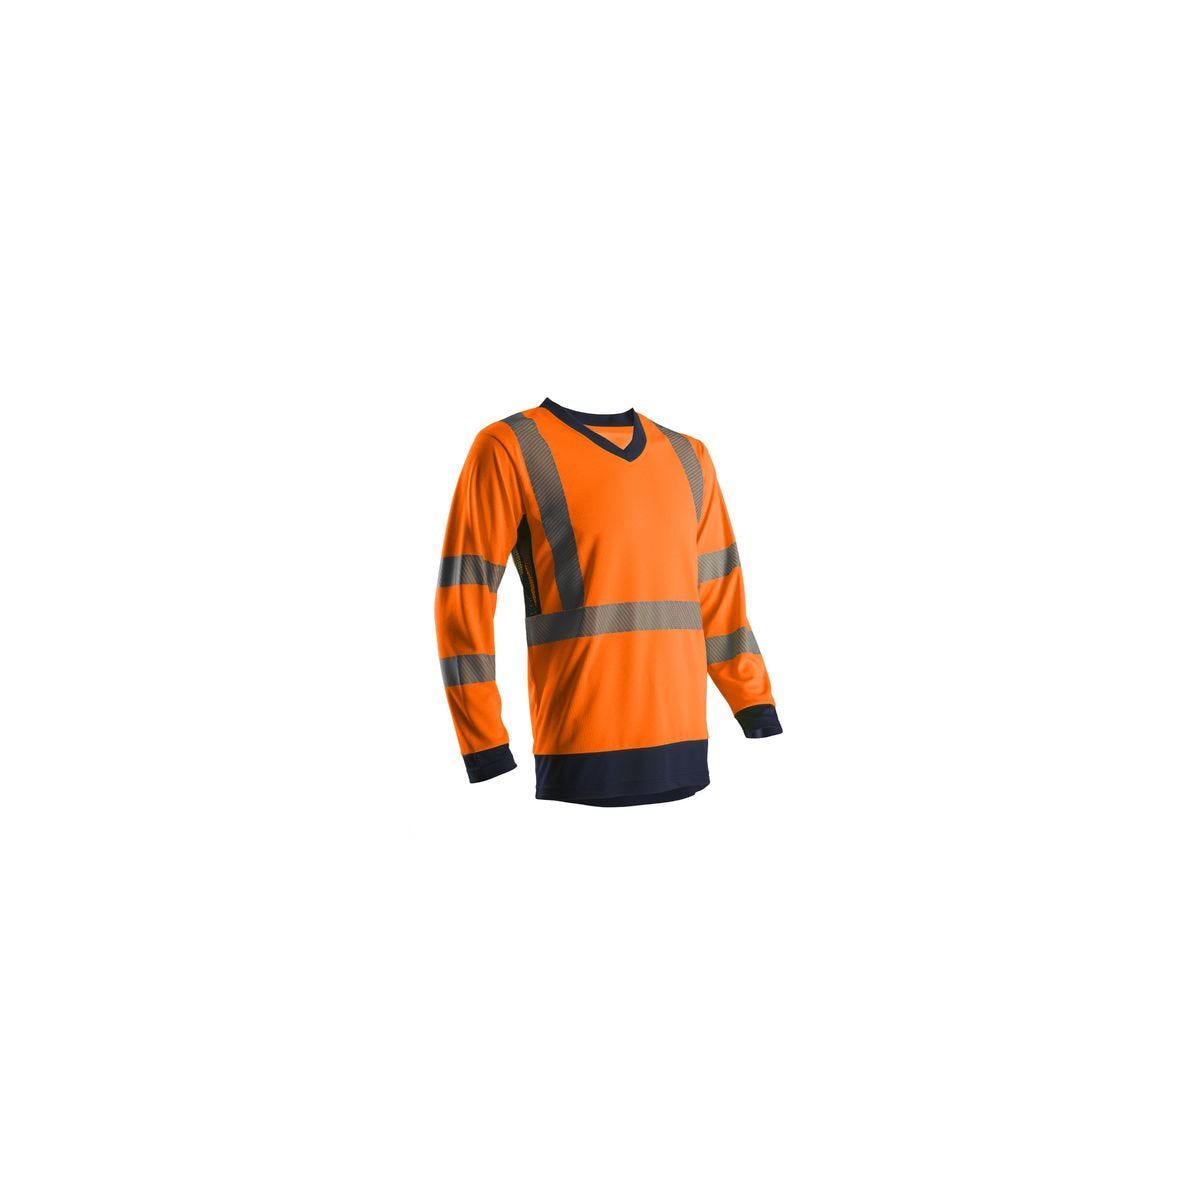 T-shirt SUNO ML orange HV/marine - COVERGUARD - Taille 2XL 0